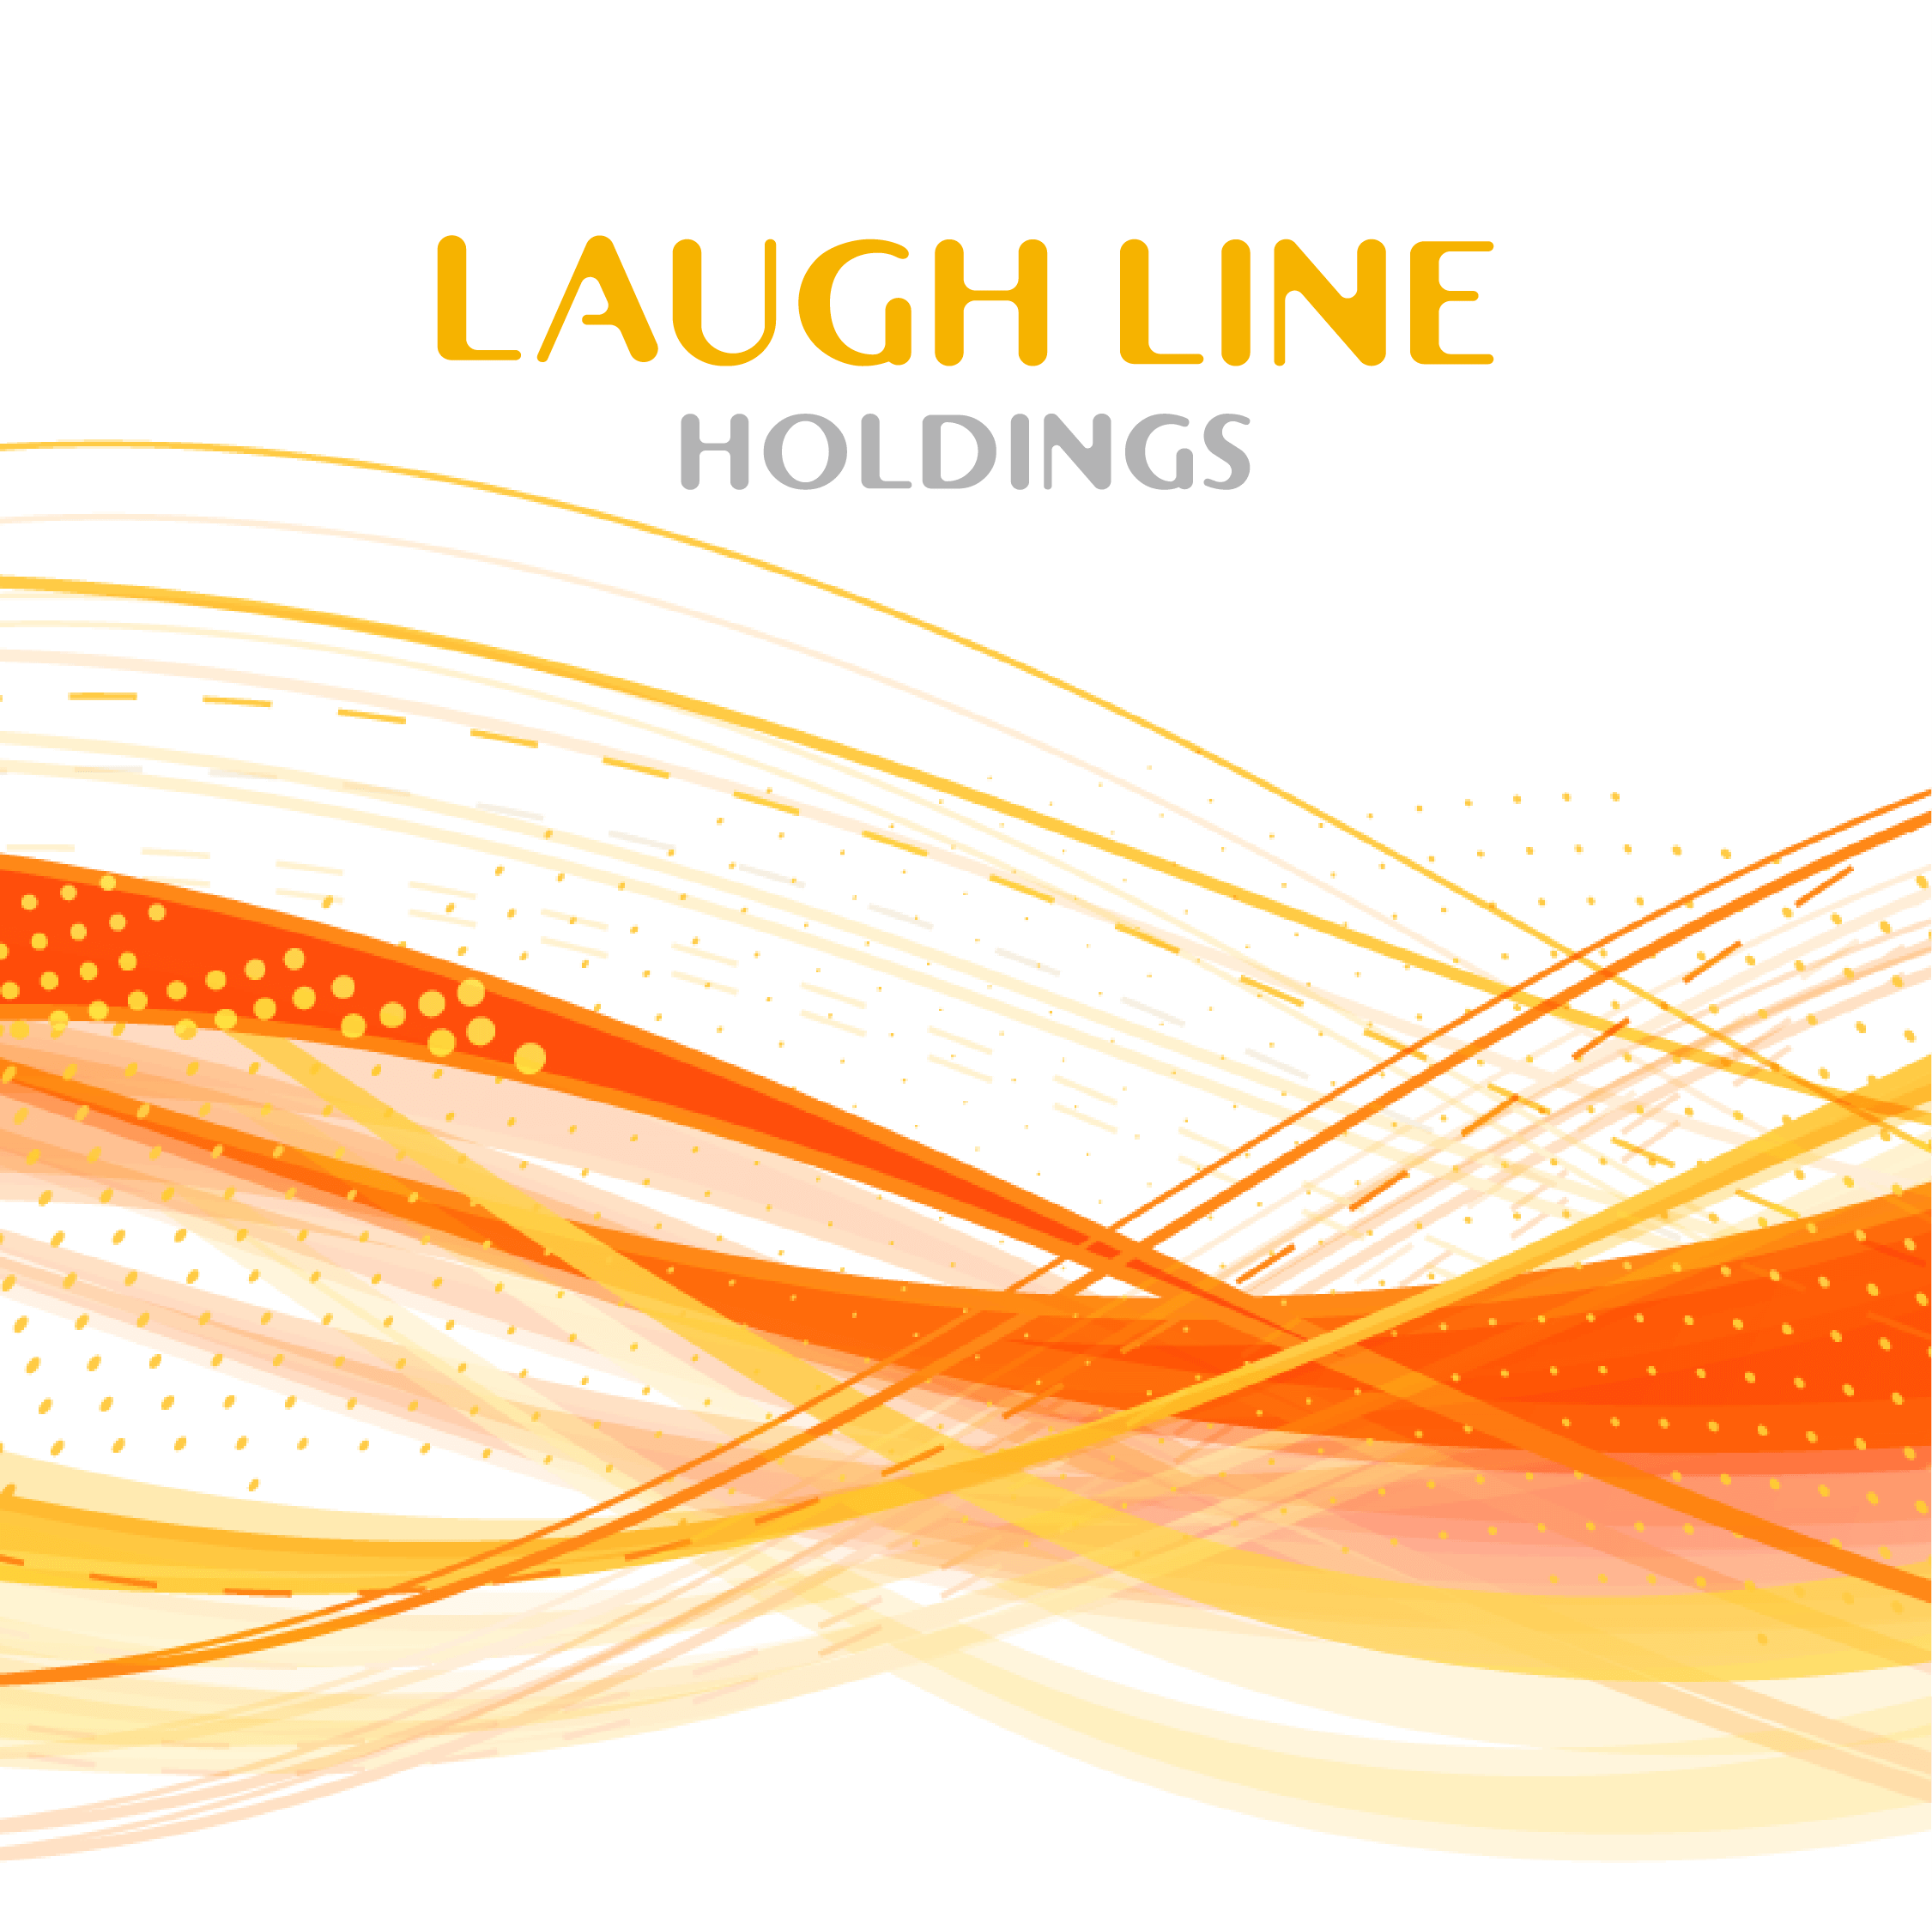 LAUGH LINE HOLDINGS